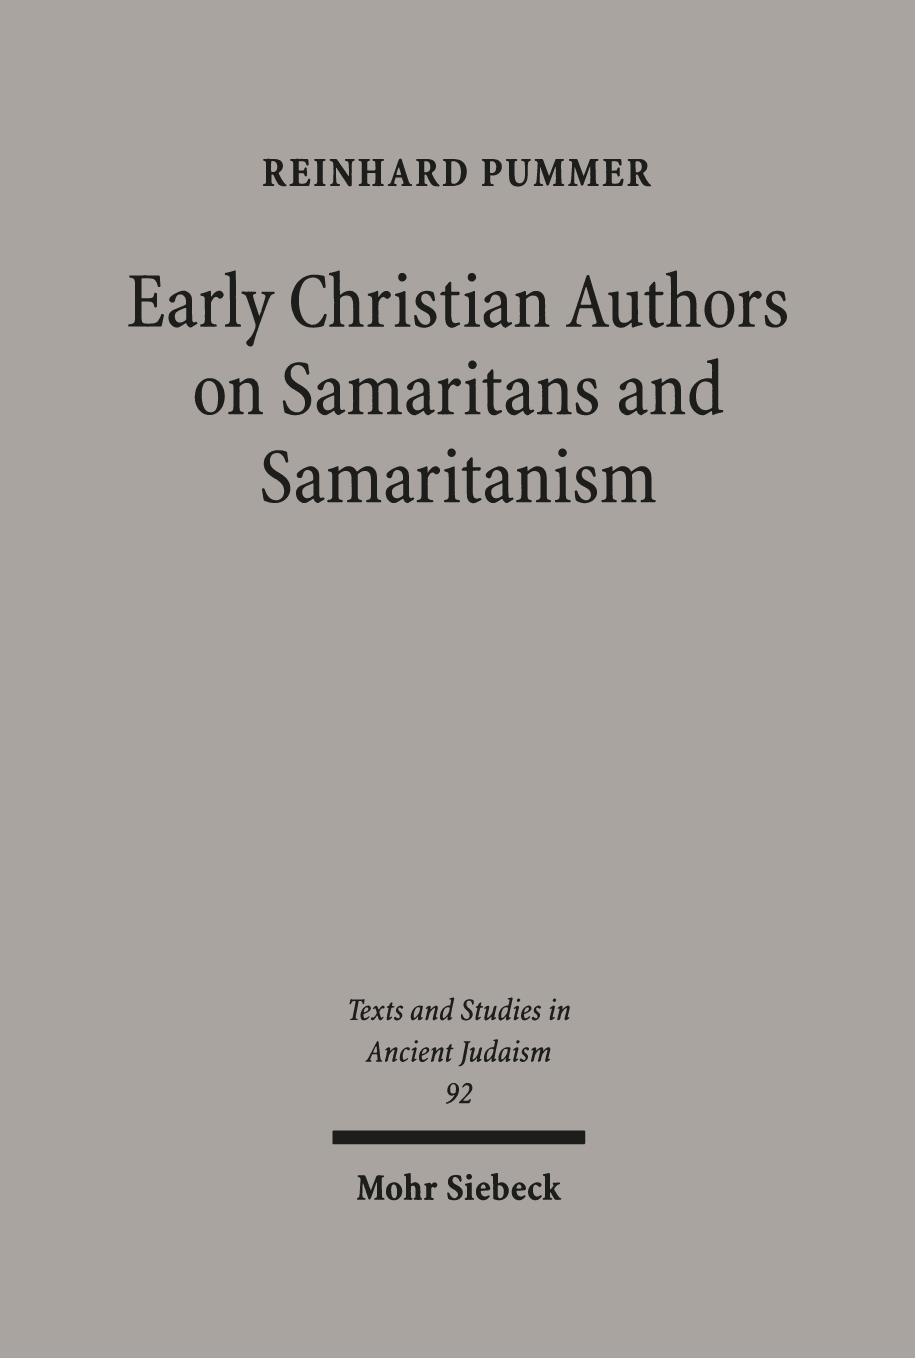 Early Christian Authors on Samaritans and Samaritanism by Reinhard Pummer